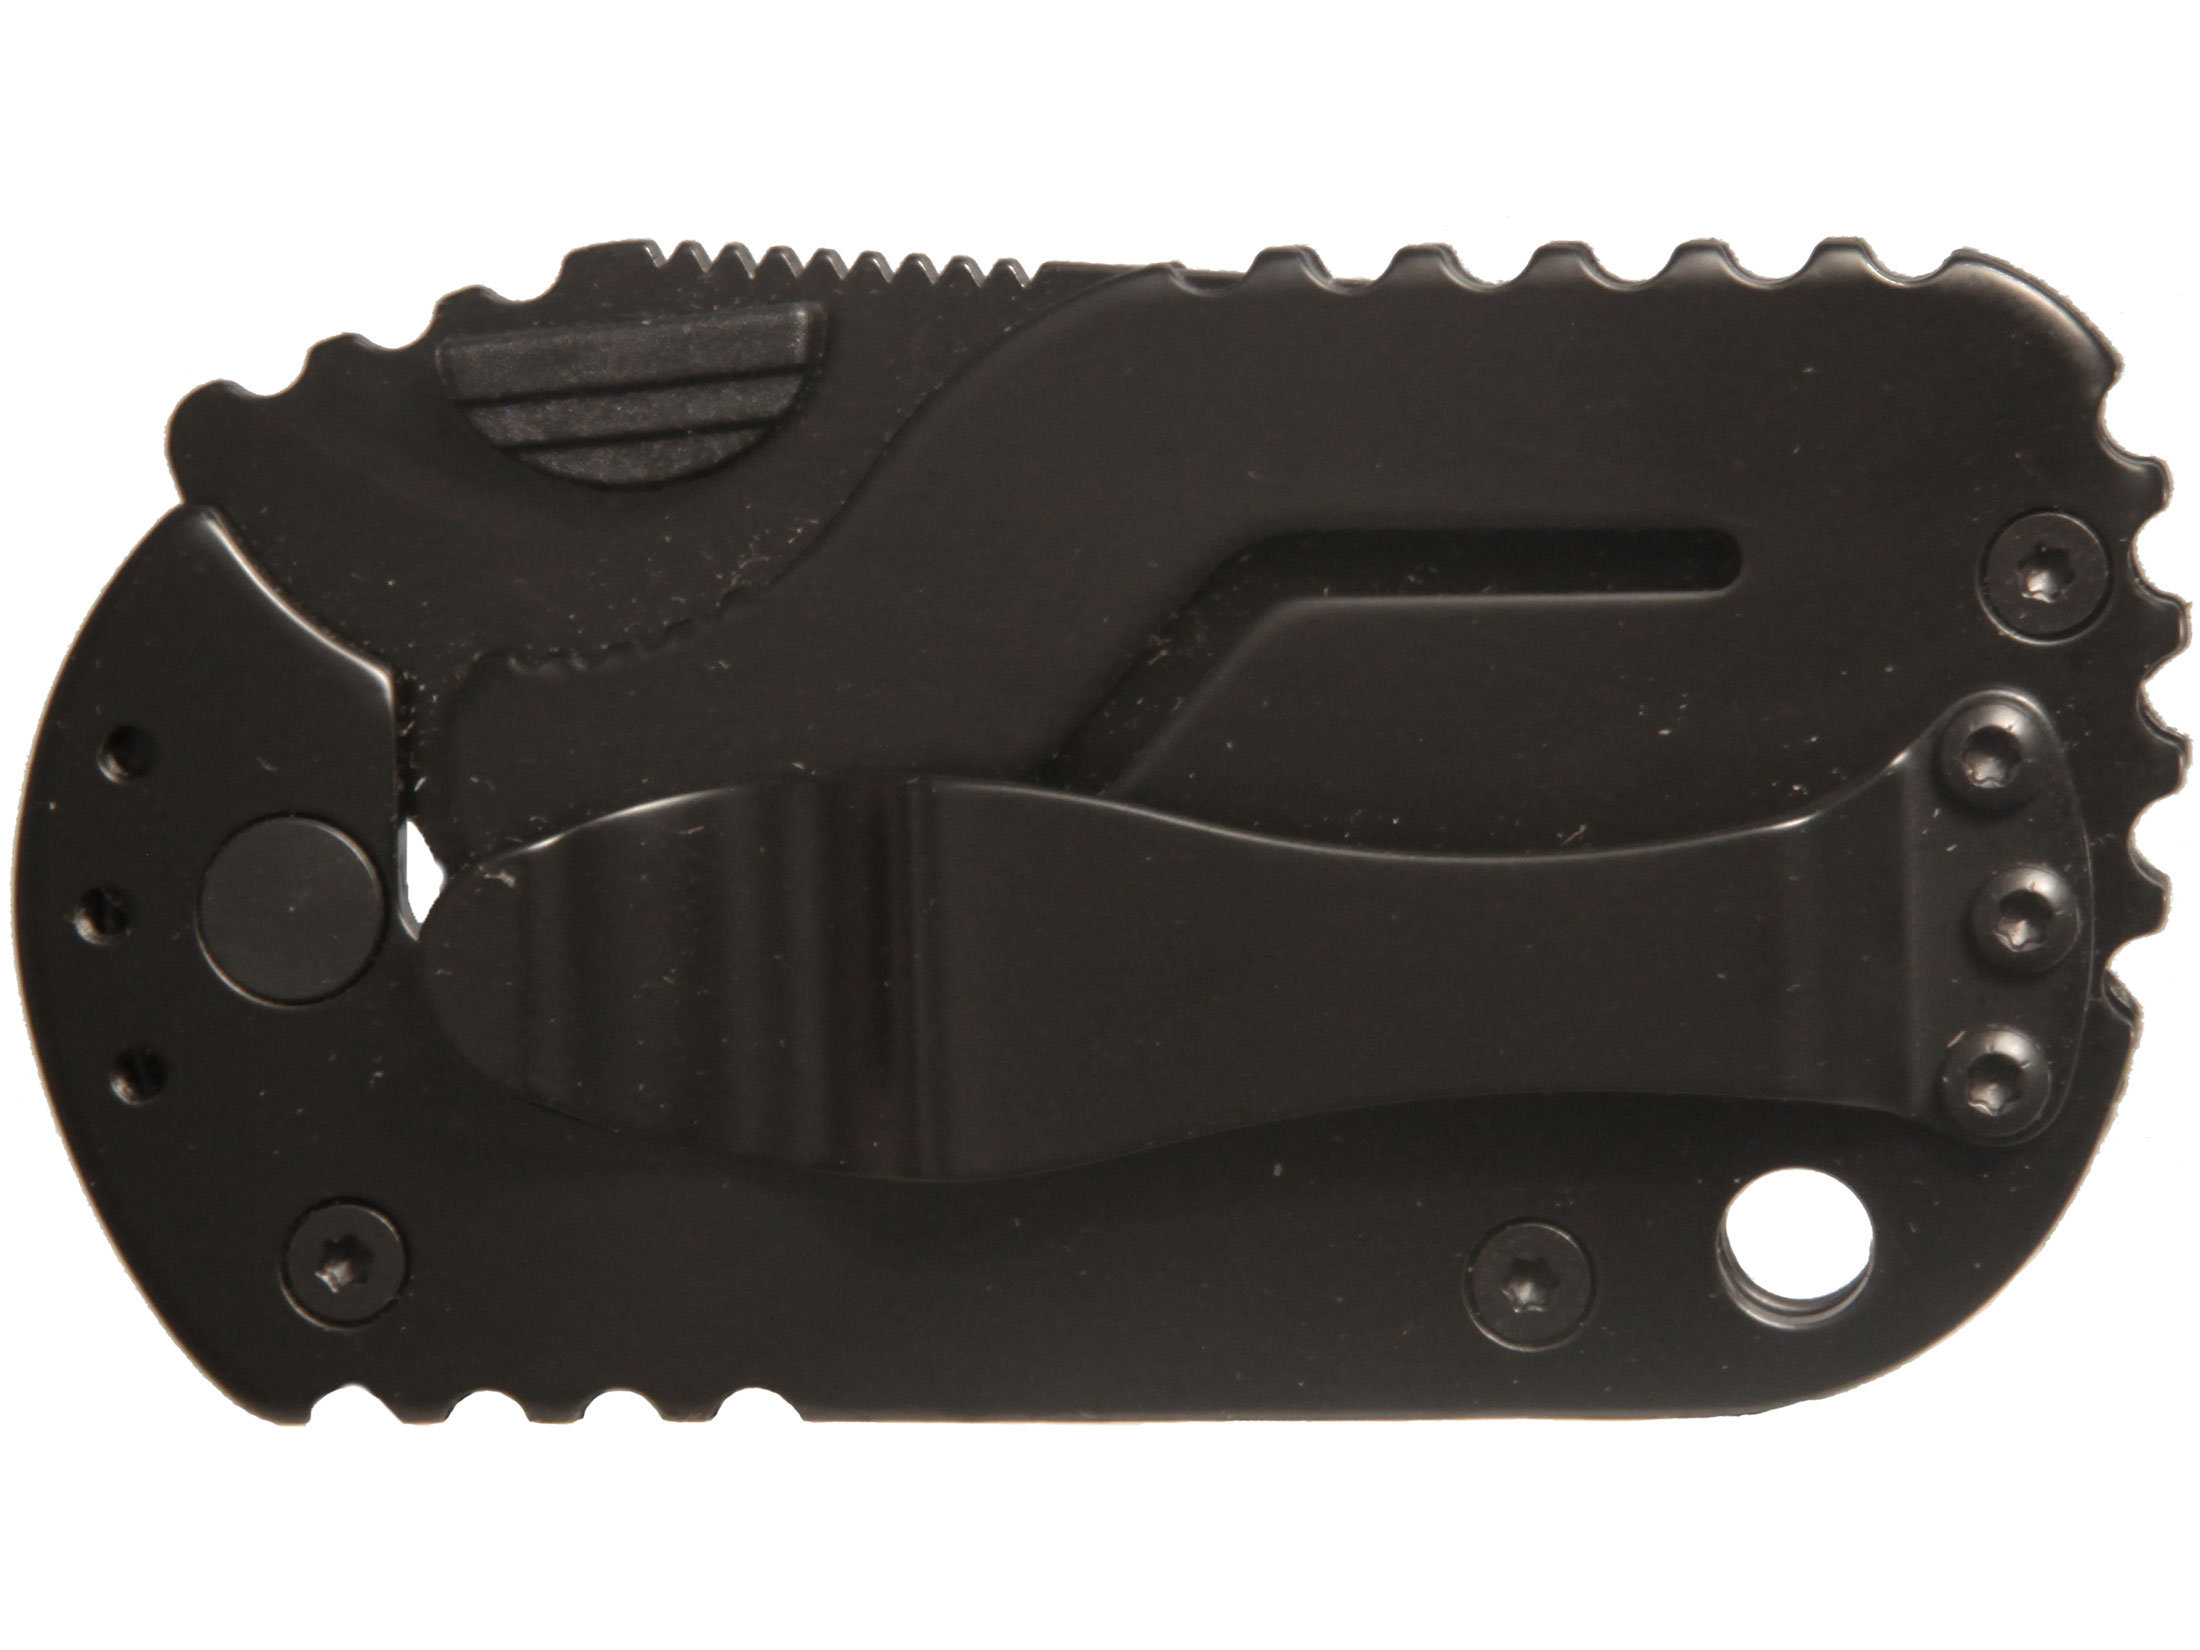 Boker Plus Subcom F Folding Knife 1-7/8″ Drop Point AUS-8 Stainless Steel Blade Nylon Handle Black For Sale